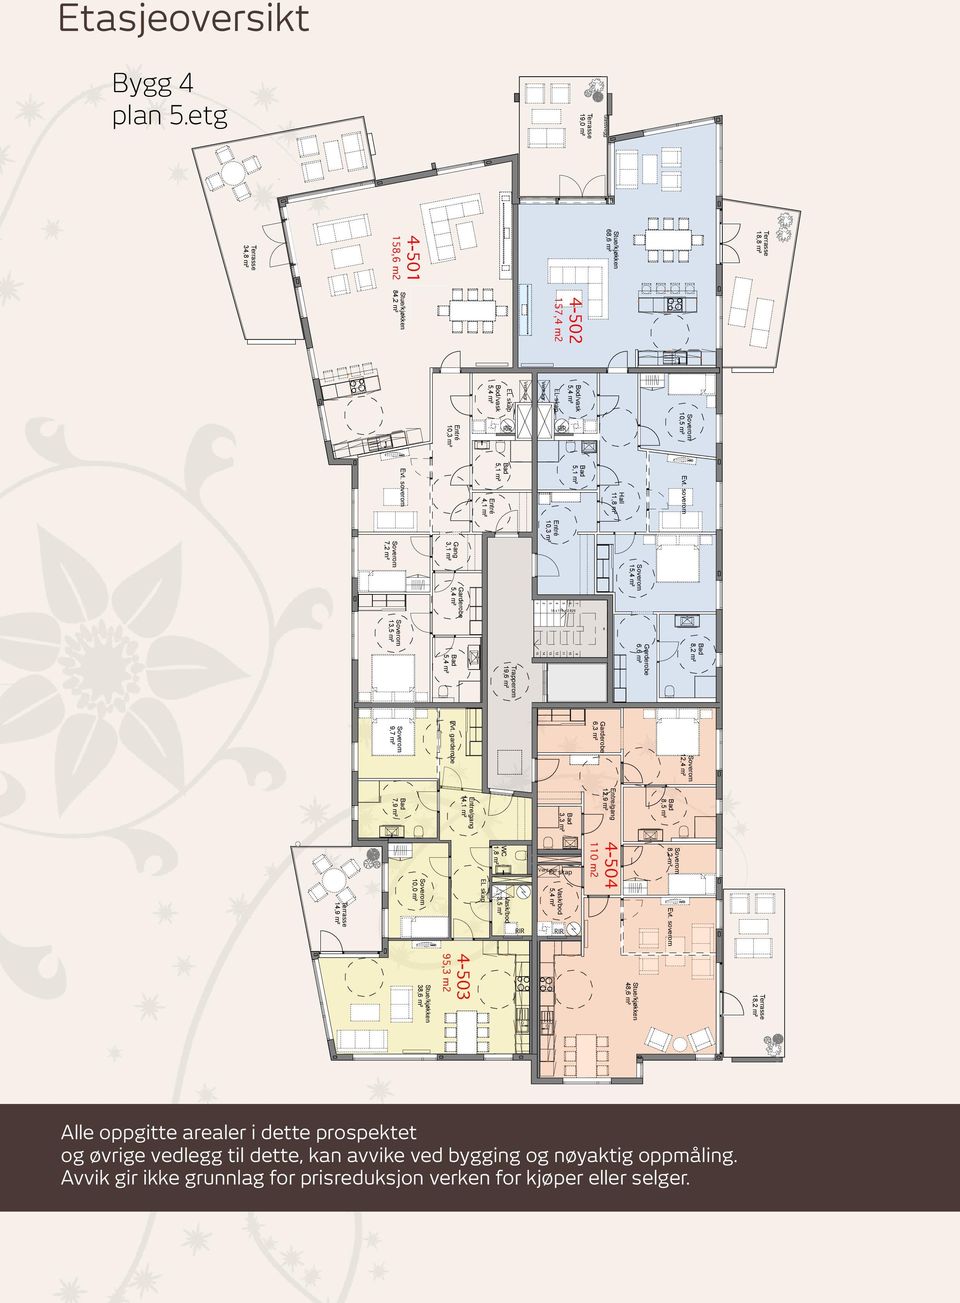 Hall 11,8 m² 15,4 m² 6,6 m² 10,5 m² Evt. erom 8,2 m² 12,4 m² 6,3 m² Evt.